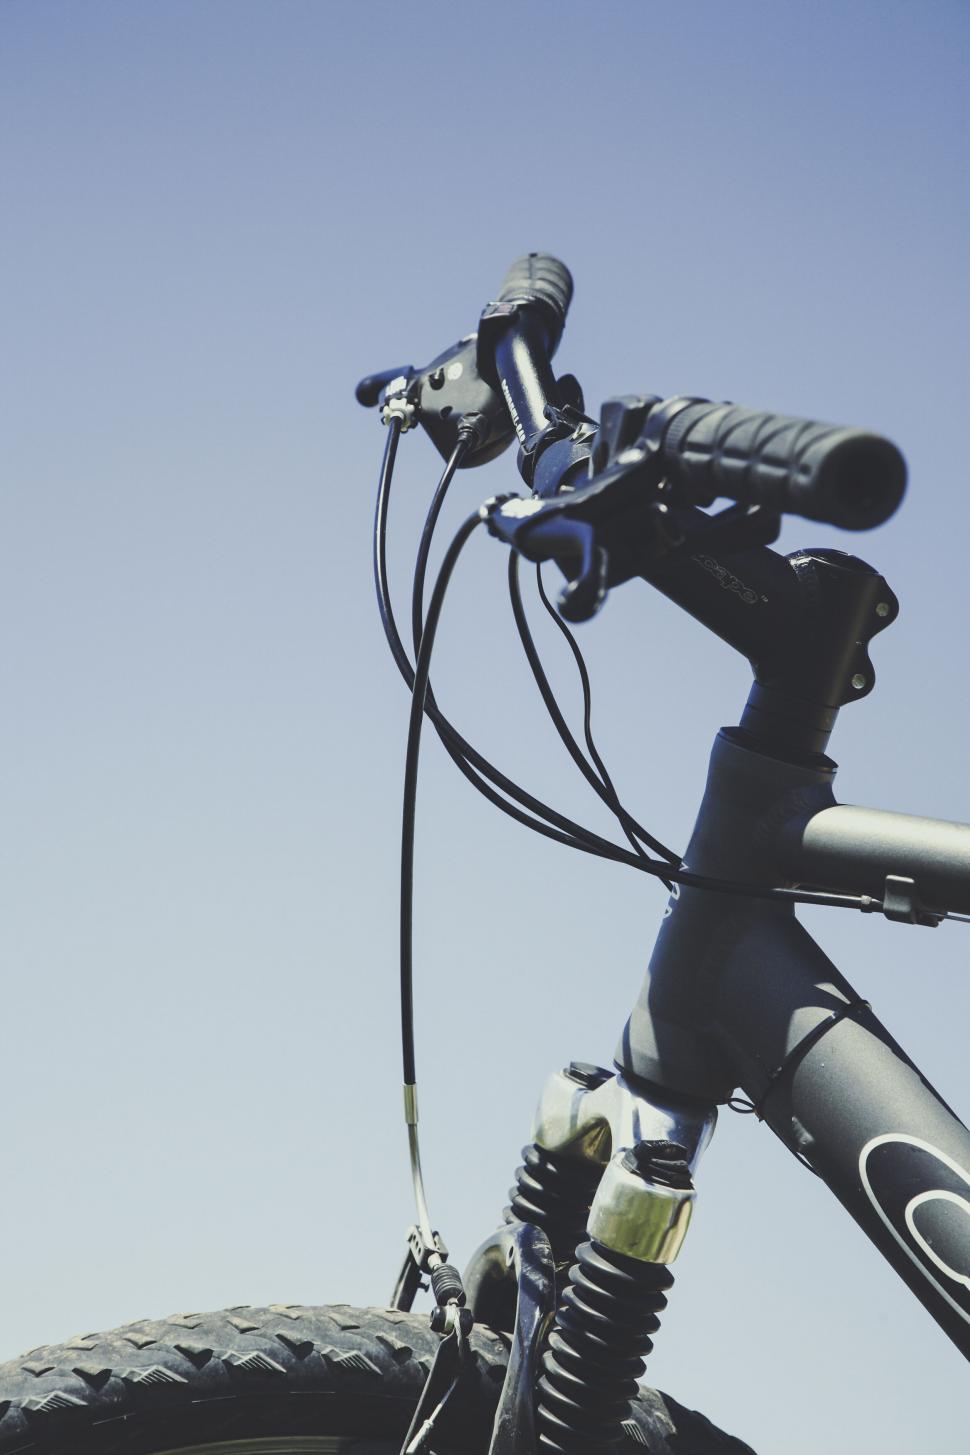 Free Image of Mountain bike handlebar against a blue sky 